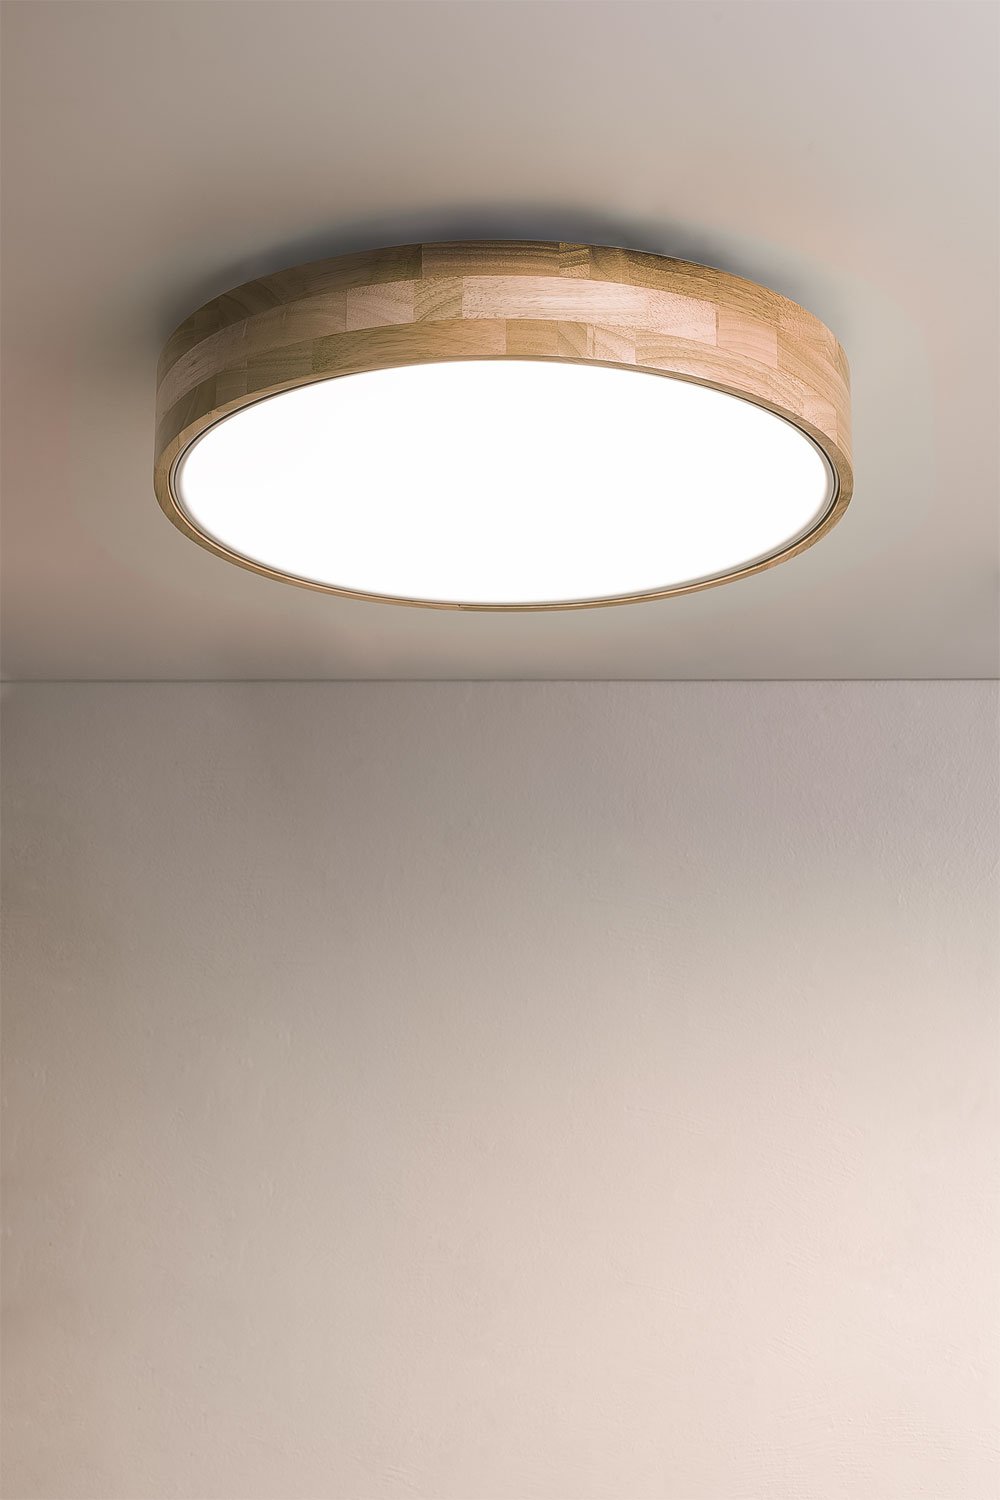 LED plafondlamp in hout en staal Balto, galerij beeld 2